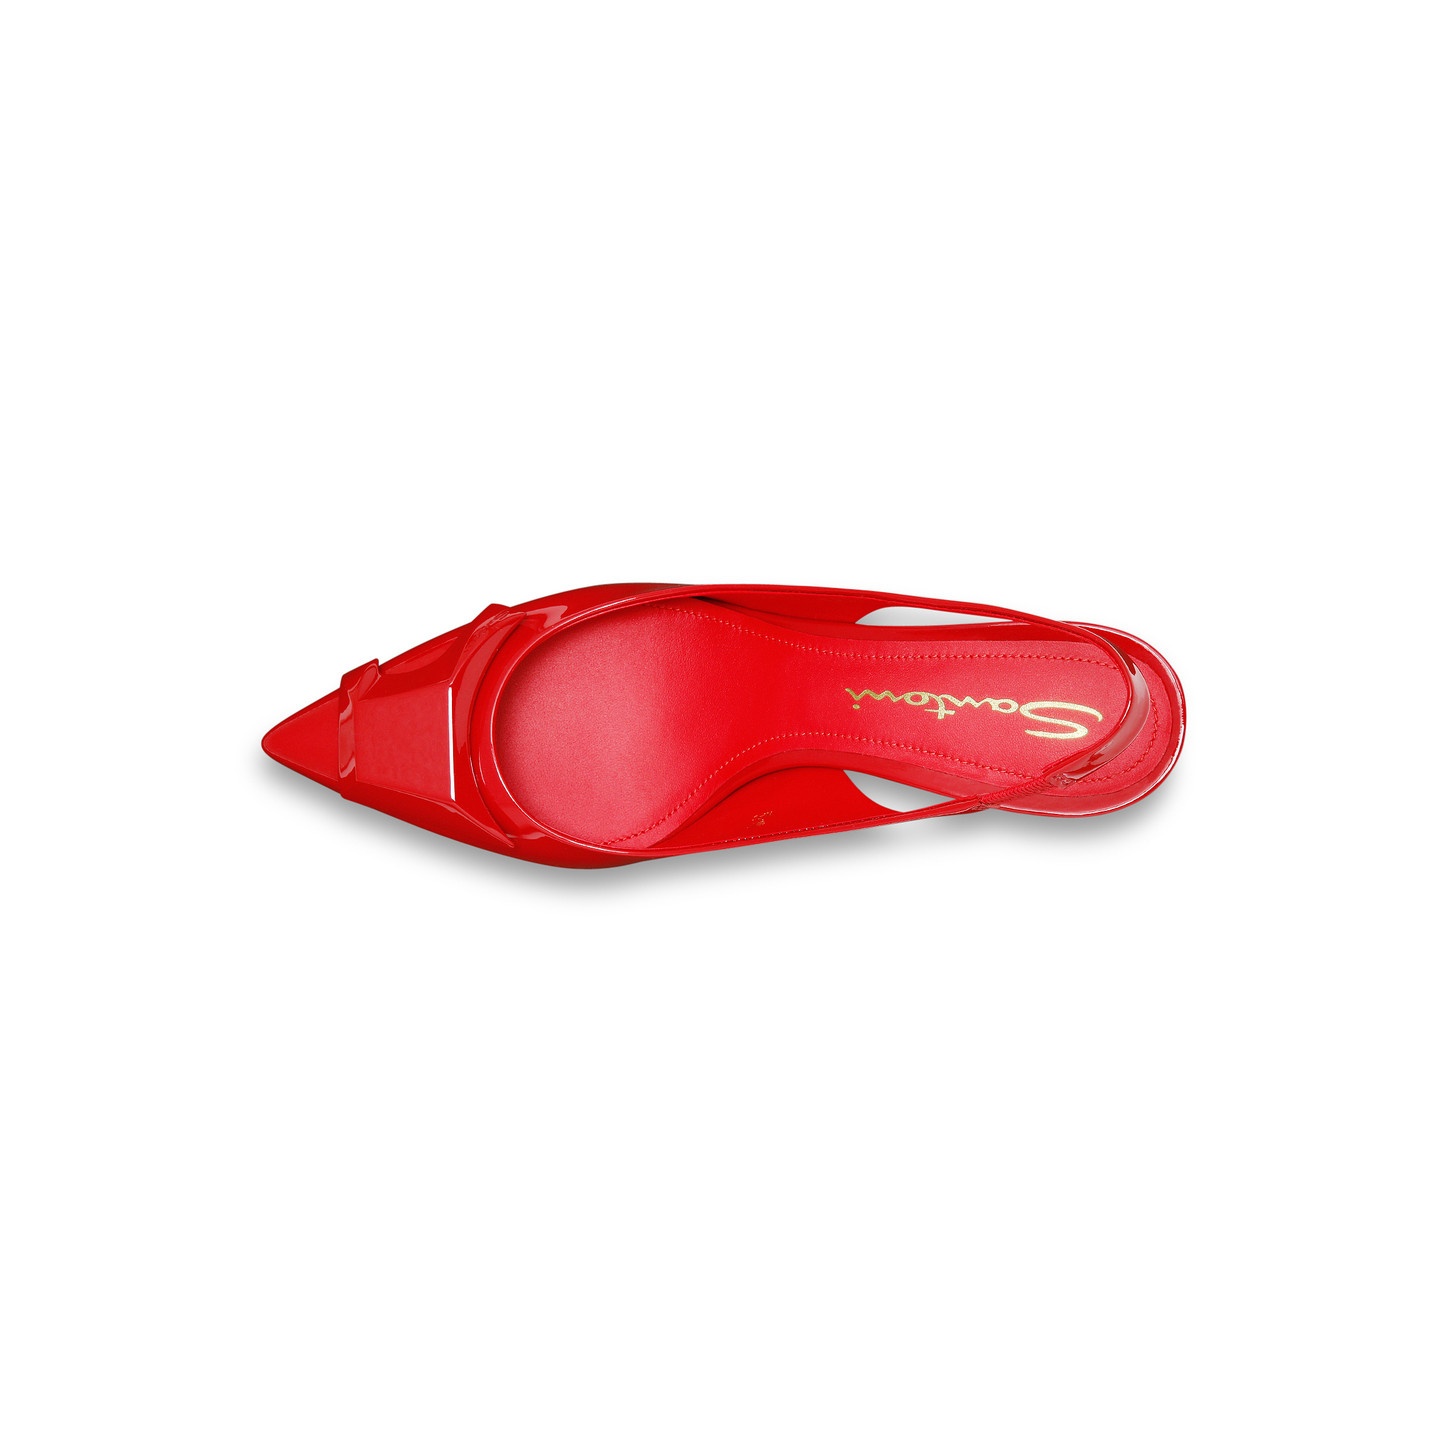 Women's red patent leather mid-heel Santoni Sibille pump - 5